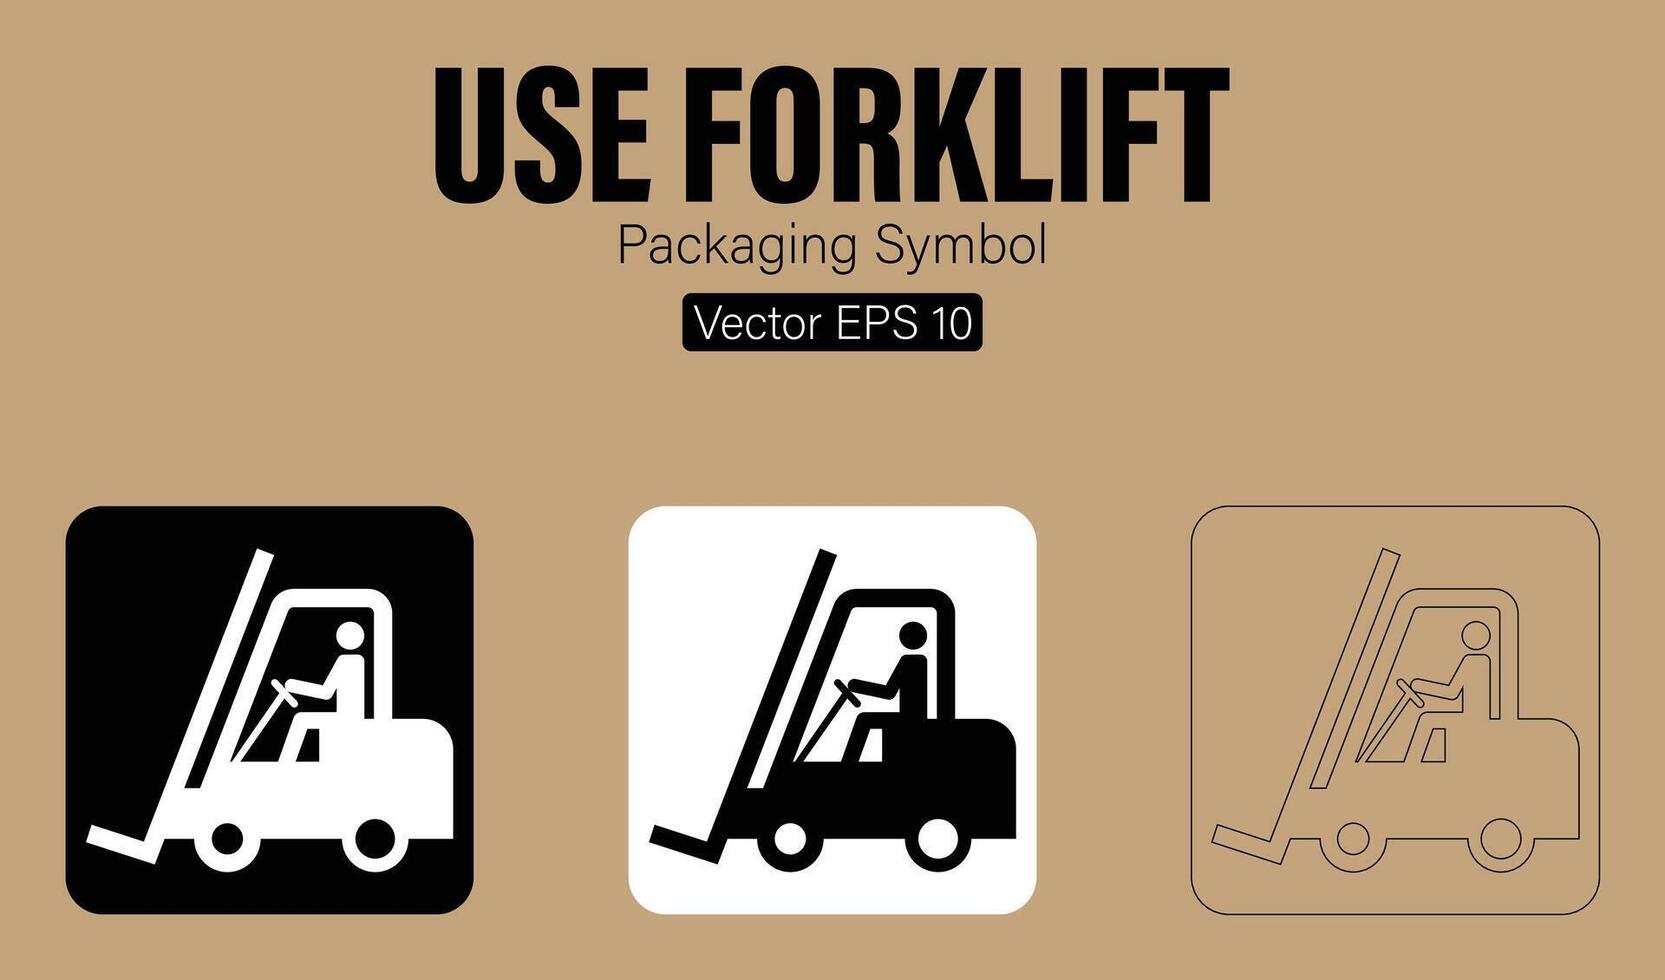 Use Forklift Packaging Symbol vector